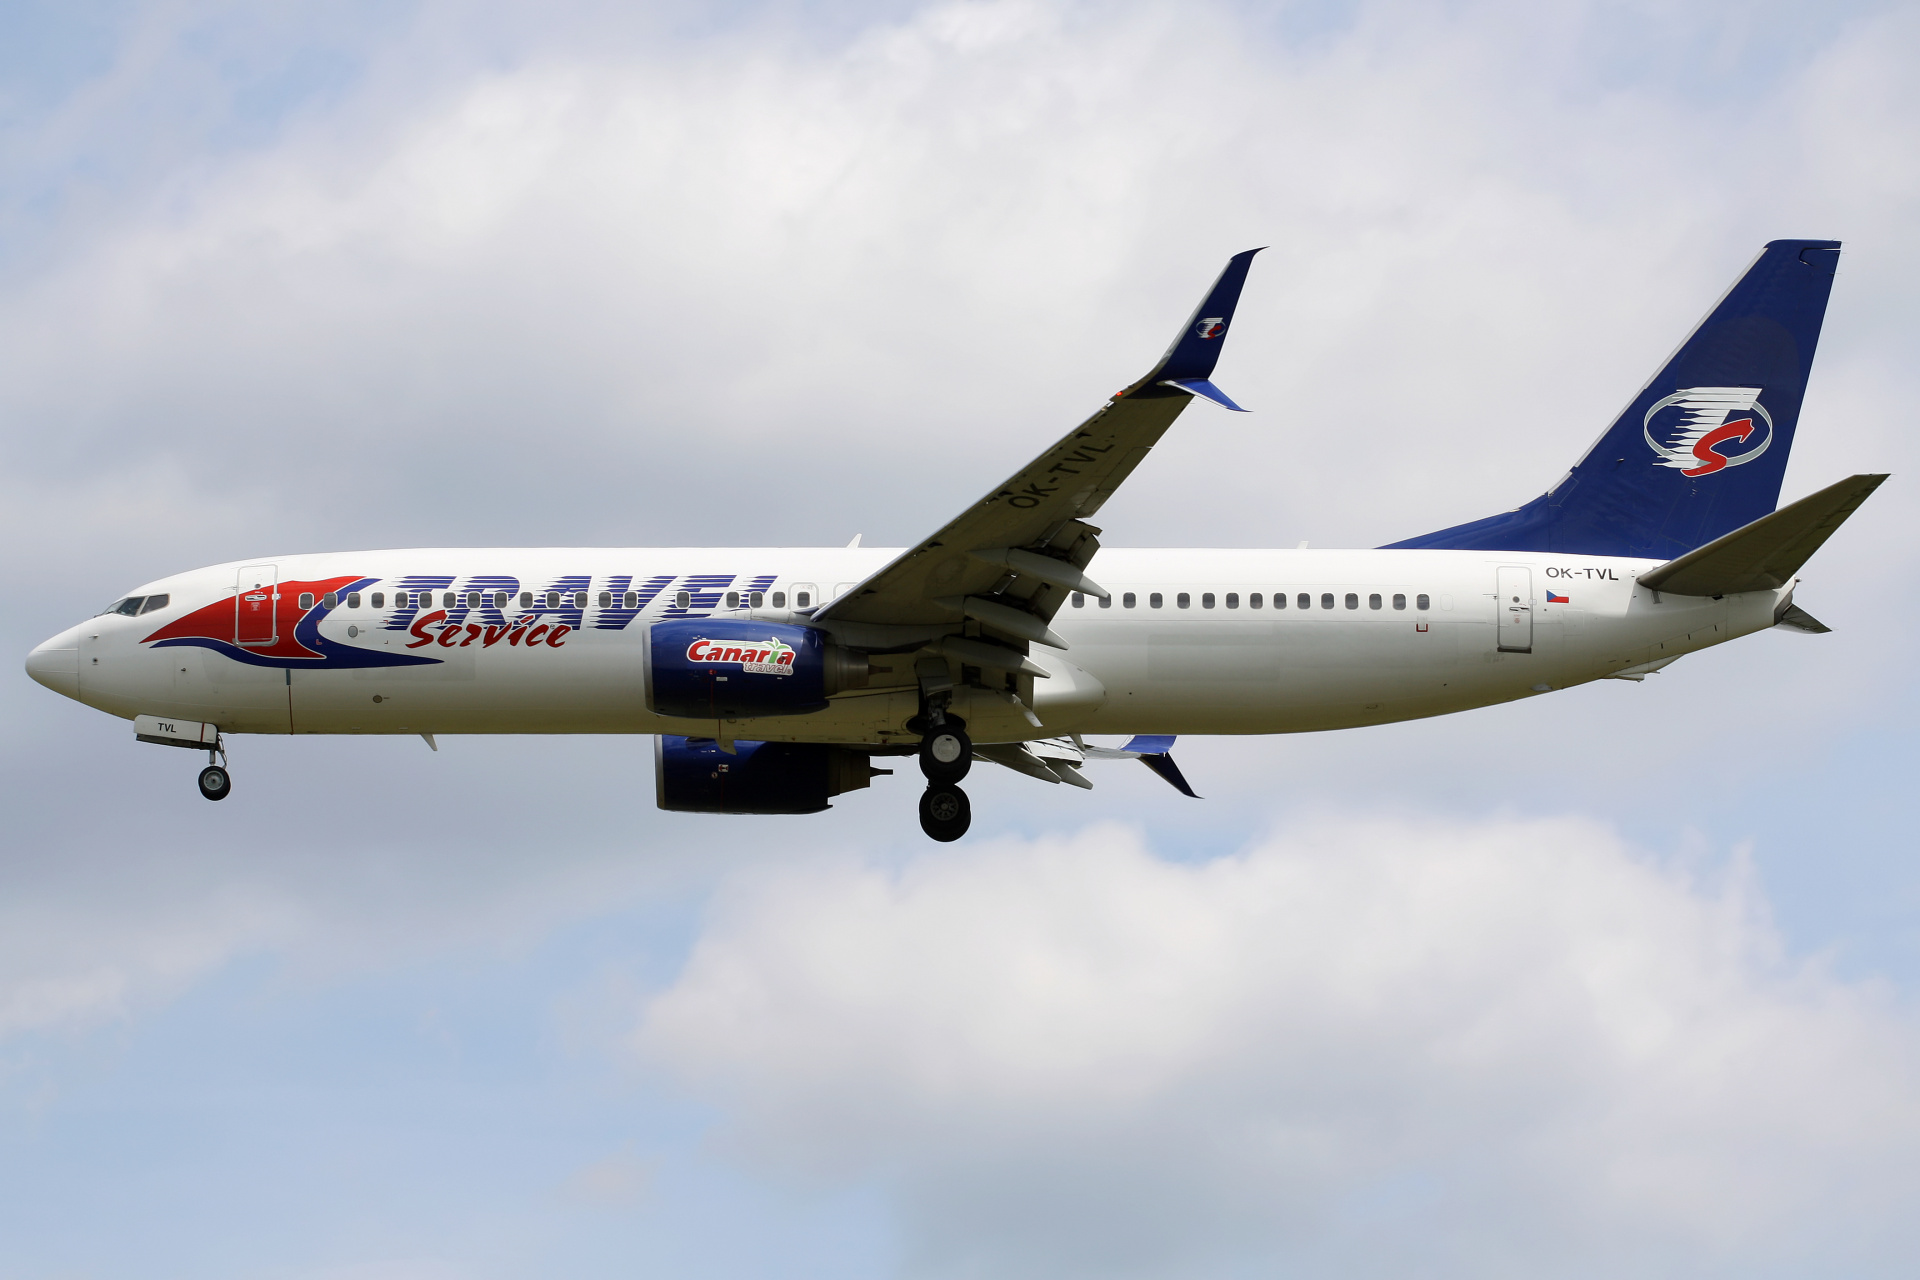 OK-TVL (scimitar winglets) (Aircraft » EPWA Spotting » Boeing 737-800 » Travel Service Airlines)